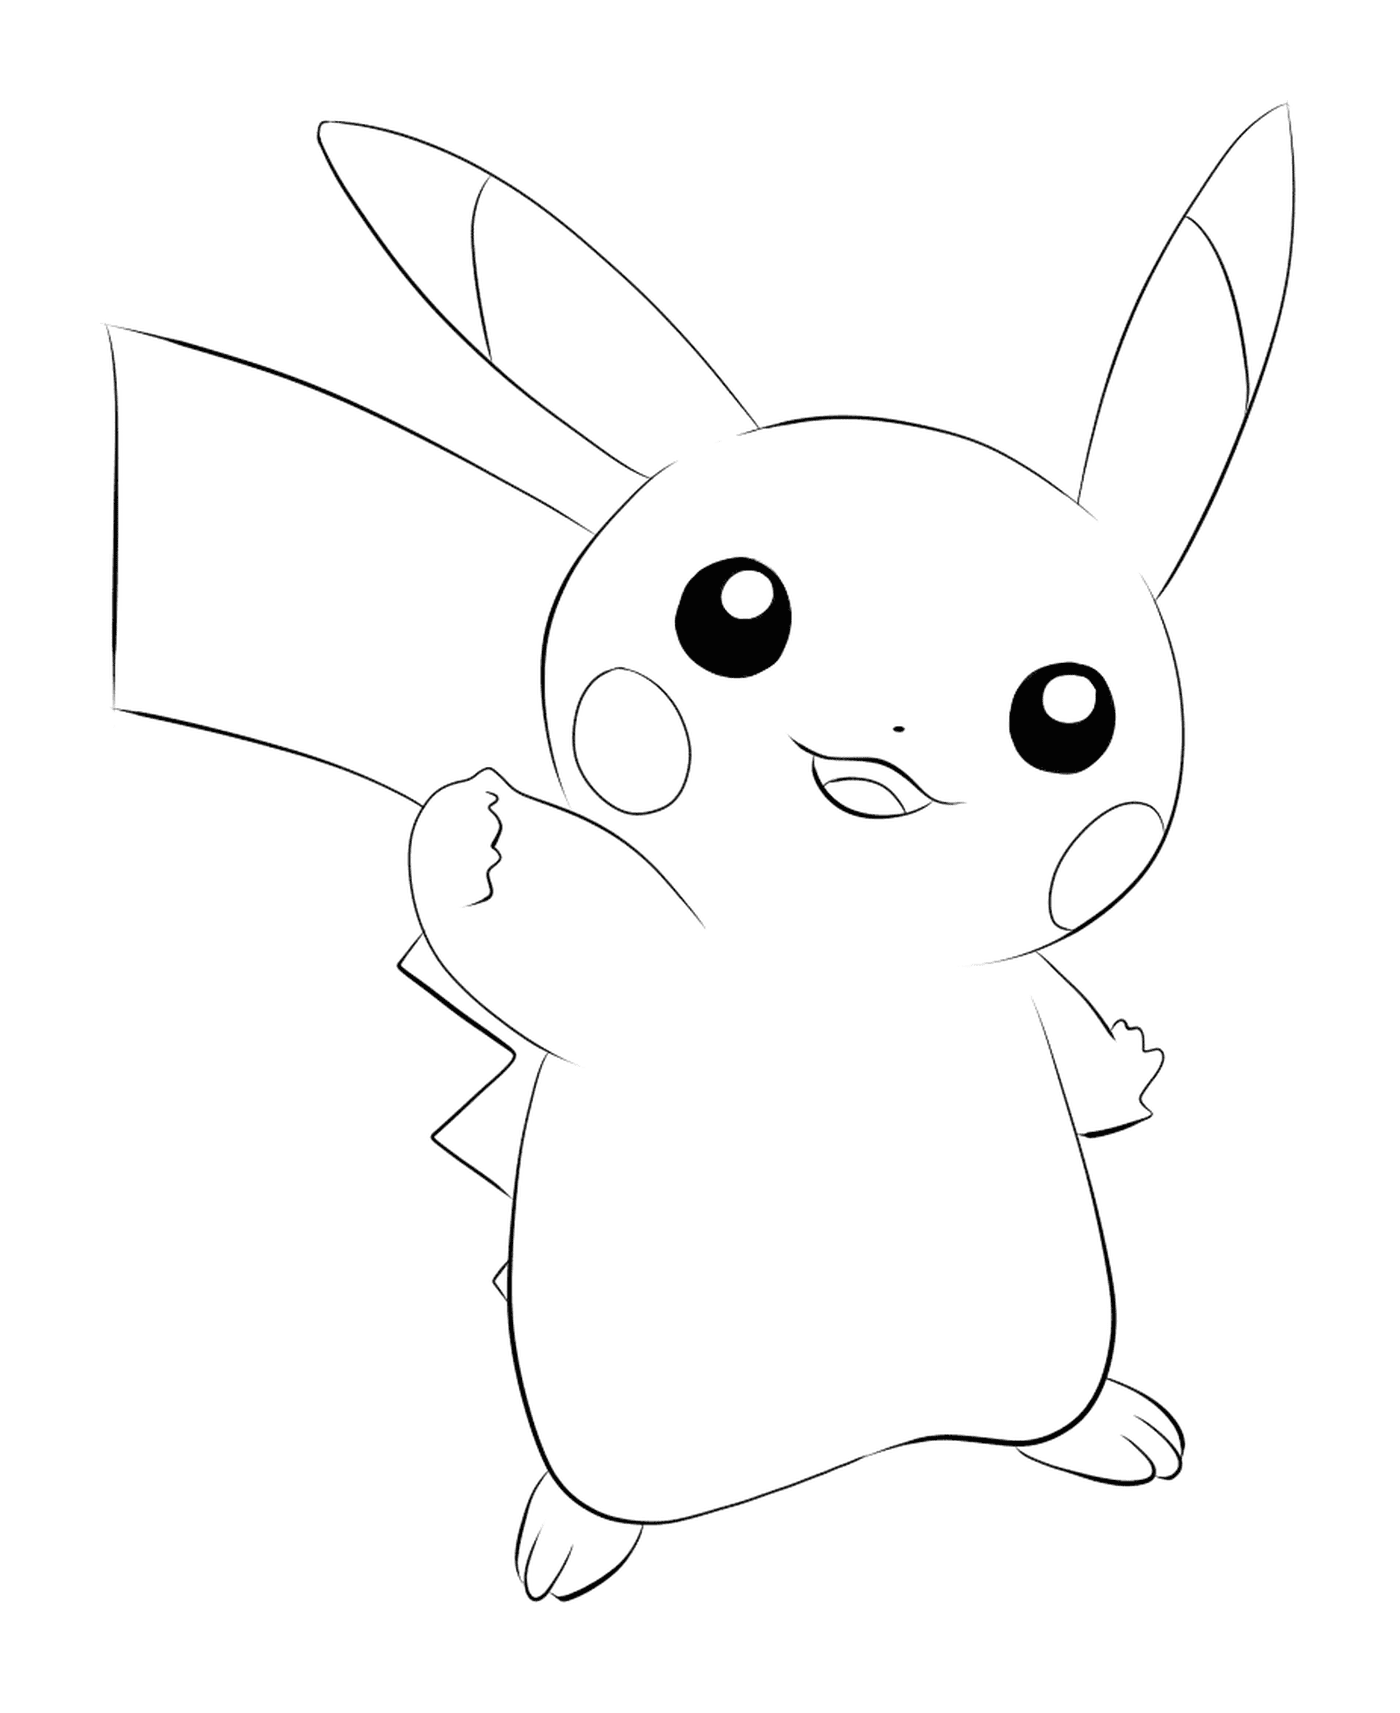  Pikachu, the iconic Pokémon 